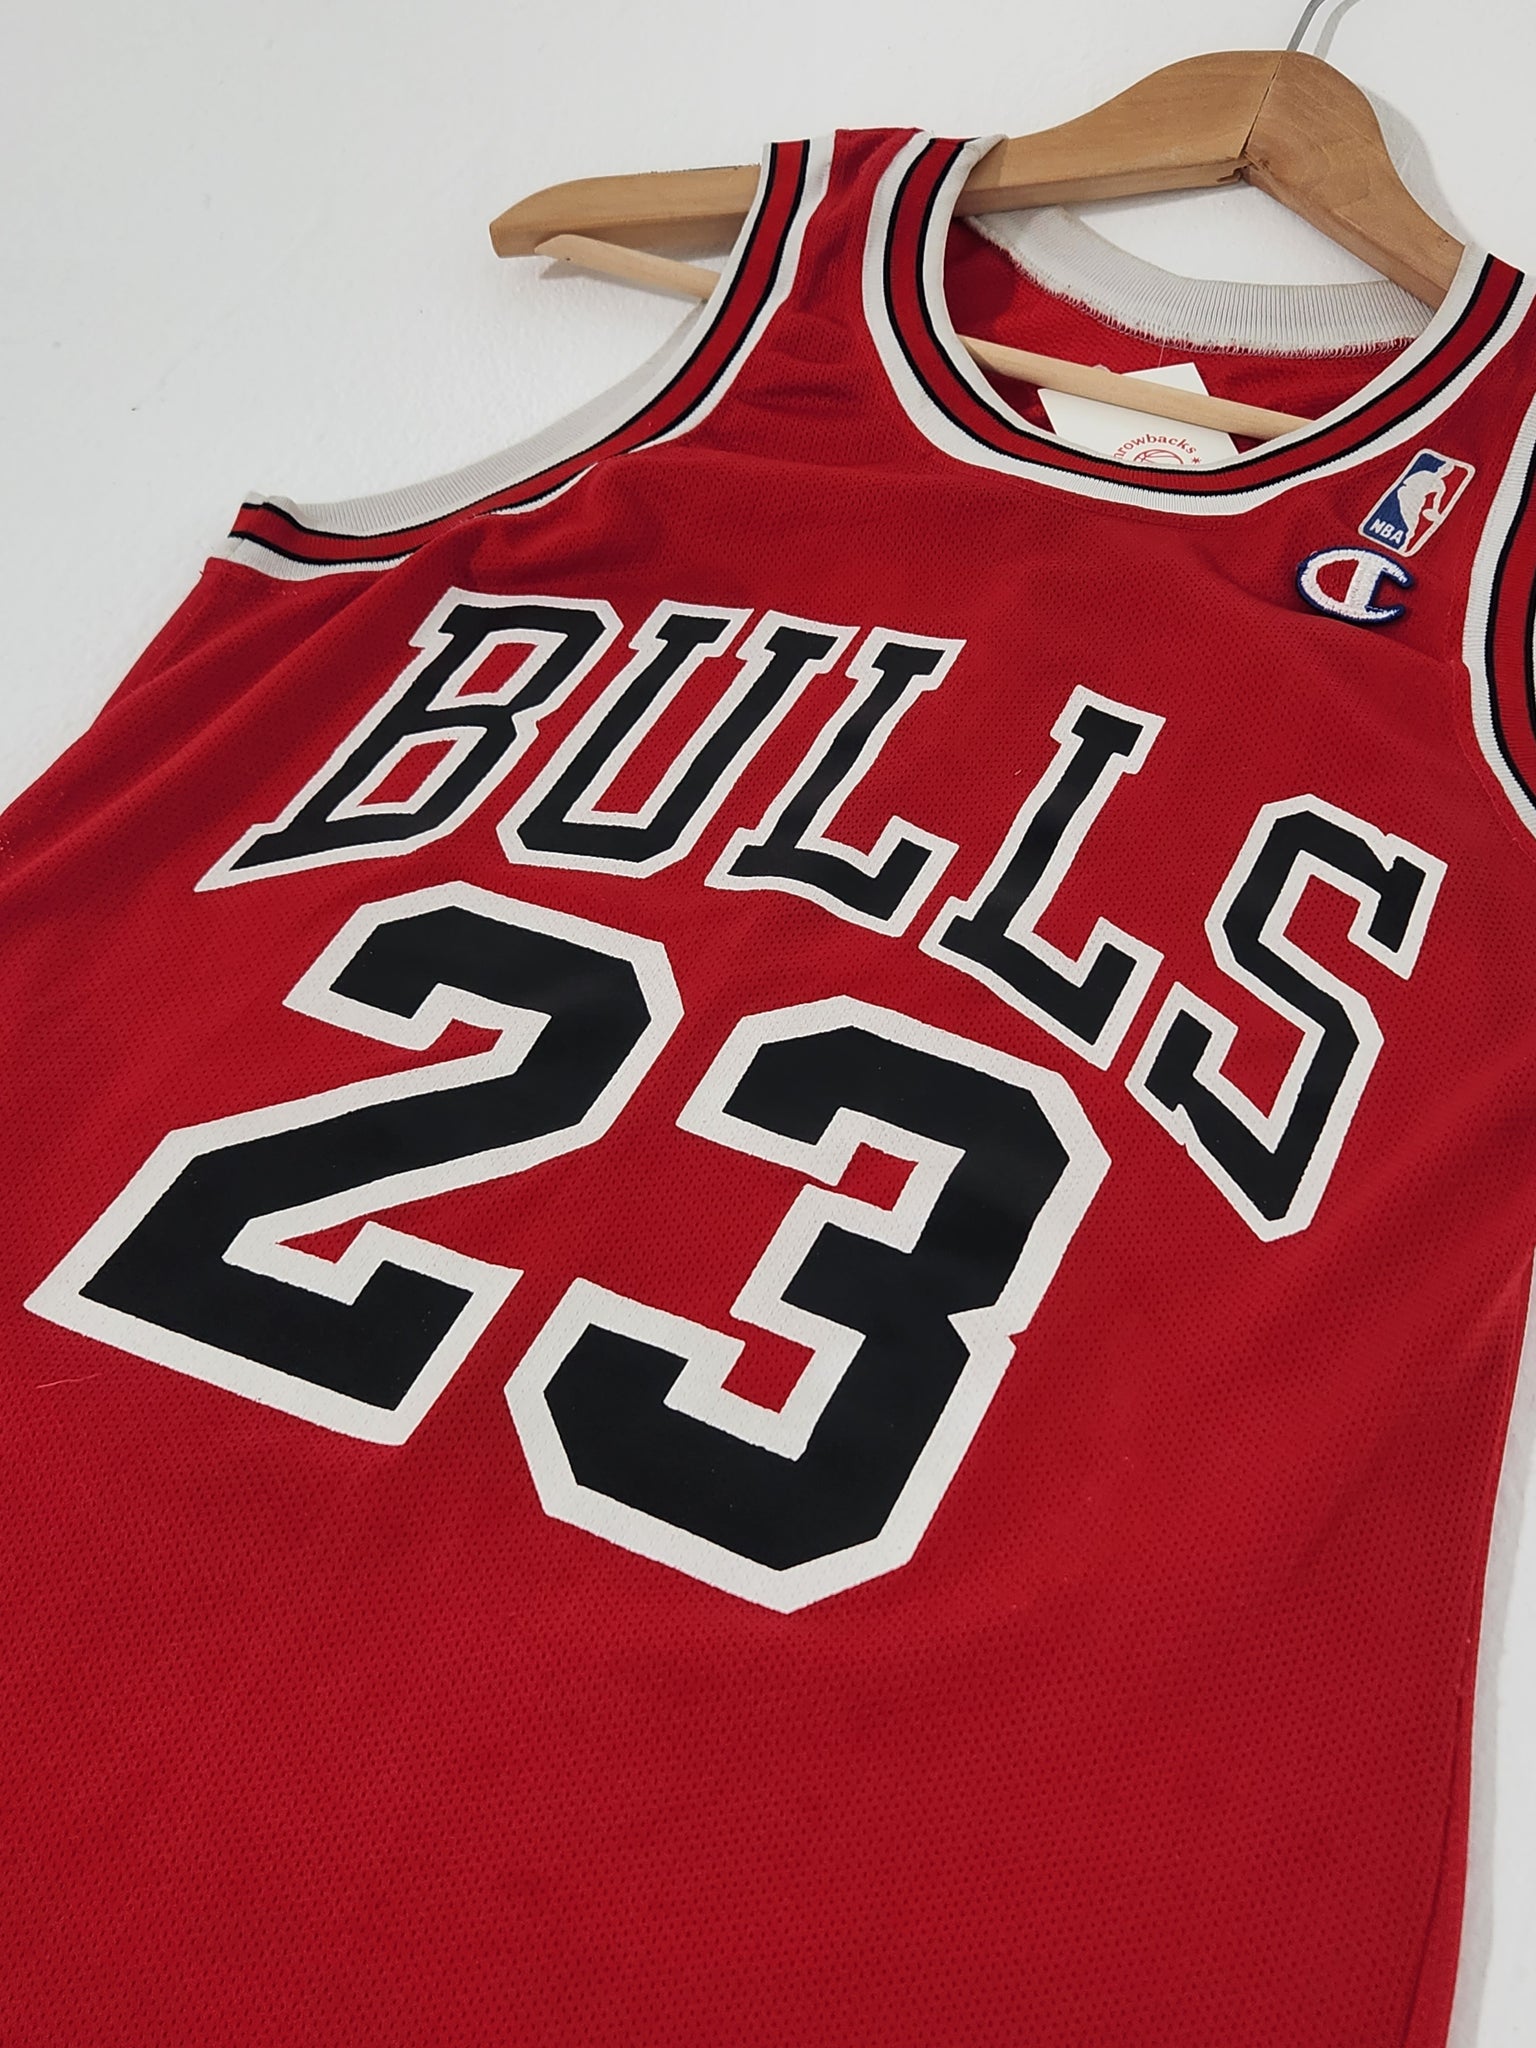 Michael Jordan Chicago Bulls NBA Jerseys for sale